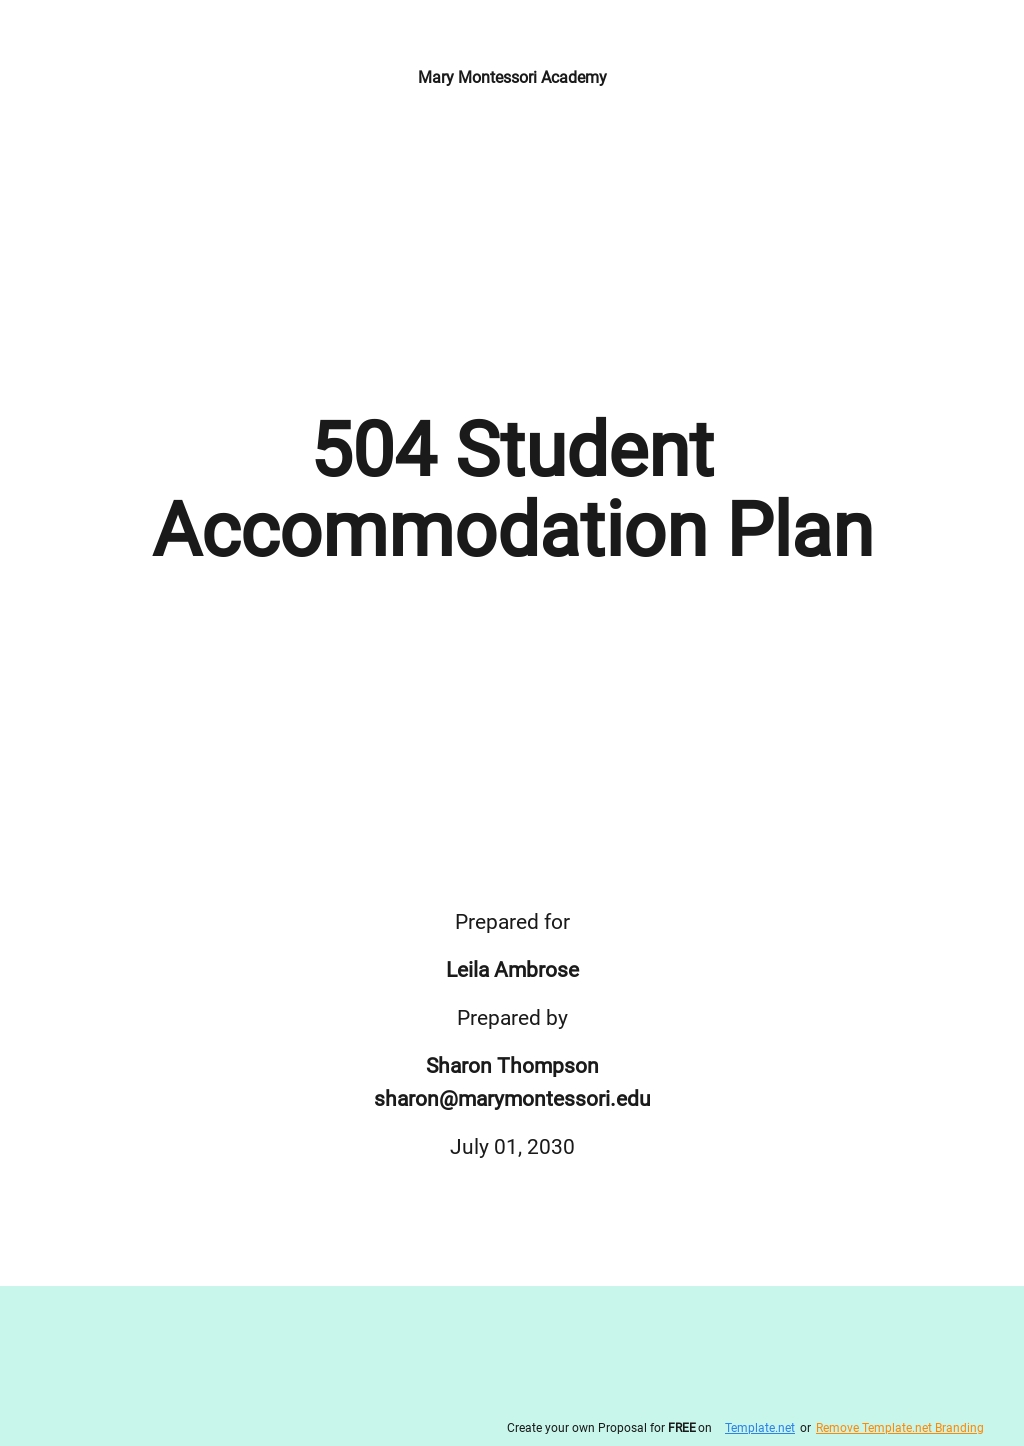 504 plan list of accommodations